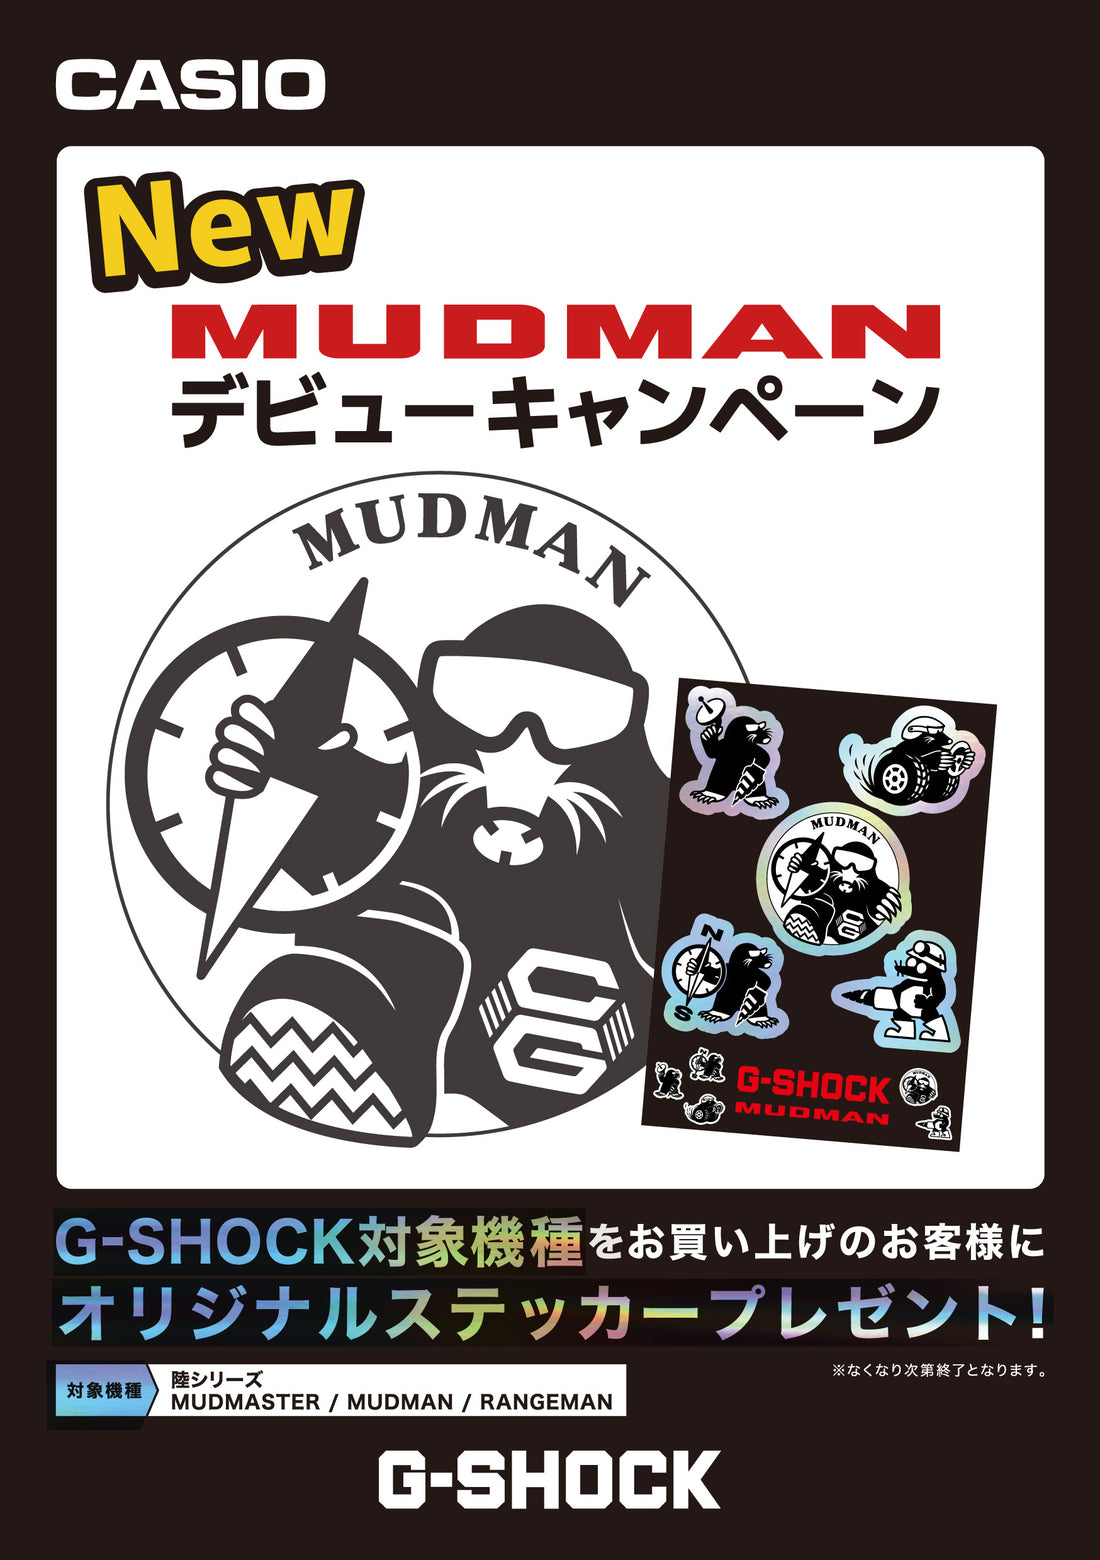 G-SHOCK New MUDMANデビューキャンペーン！